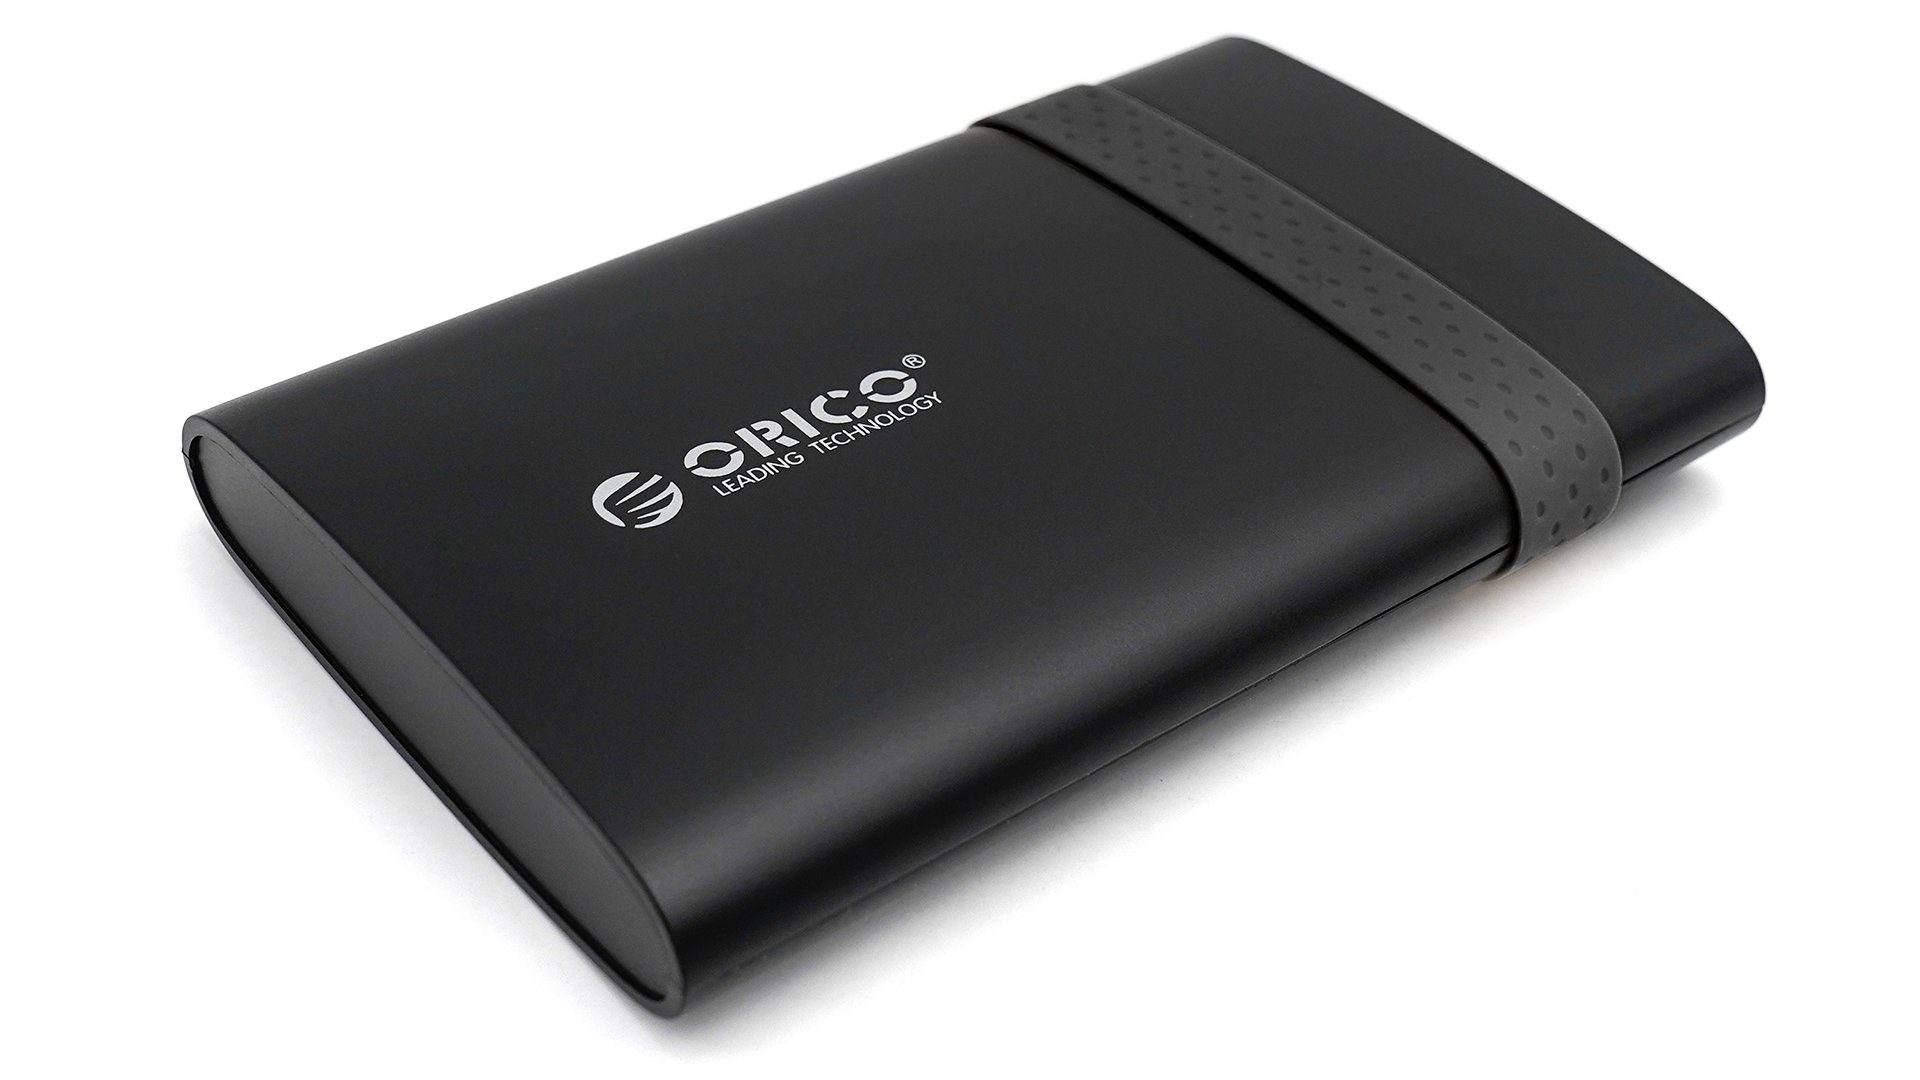 ORICO Orico 200GB USB 3.0 Externe Festplatte 2.5" HDD Tragbare - schwarz externe HDD-Festplatte (200GB) 2.5", für Fotos smart TV PC Mac Laptop Computer